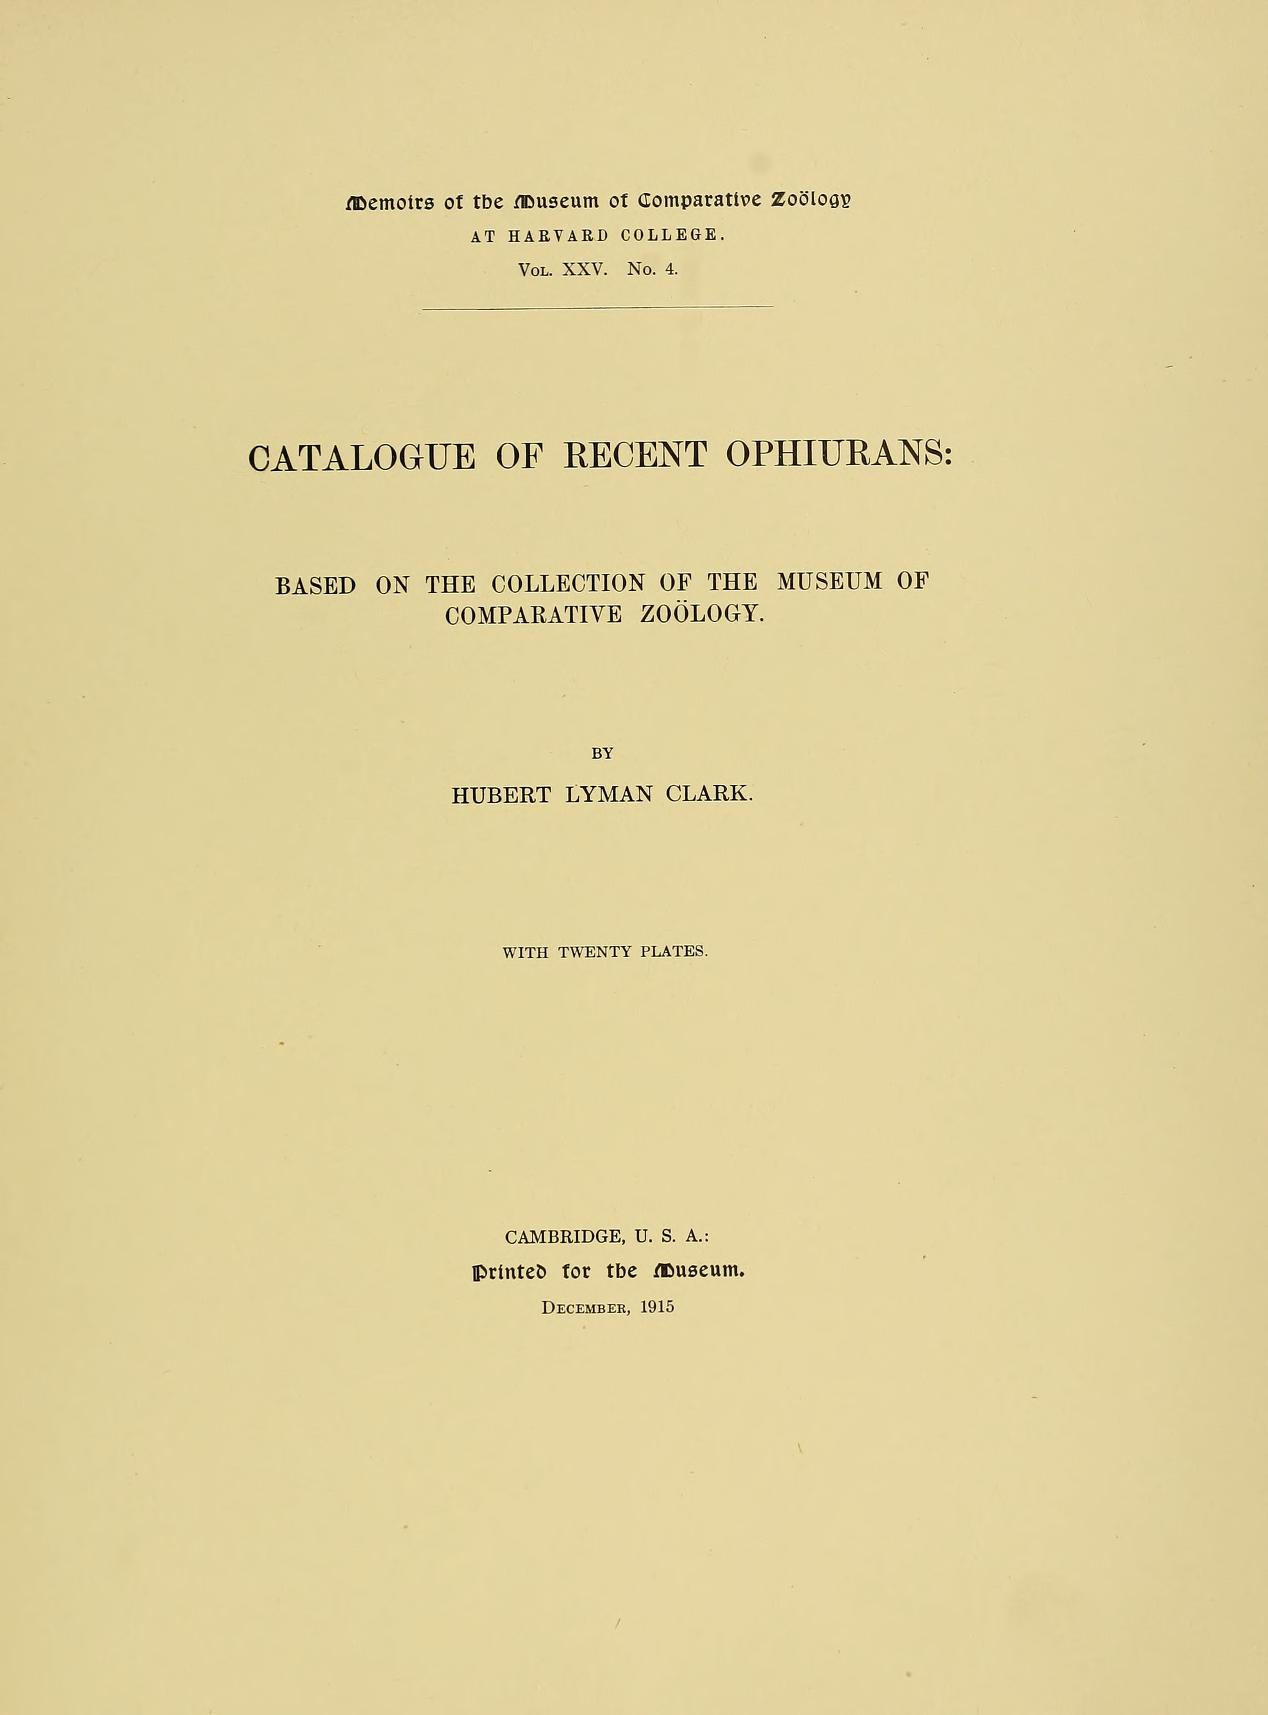 Media type: text, Clark 1915. Description: MCZ Memoirs Vol. XXV no. 4